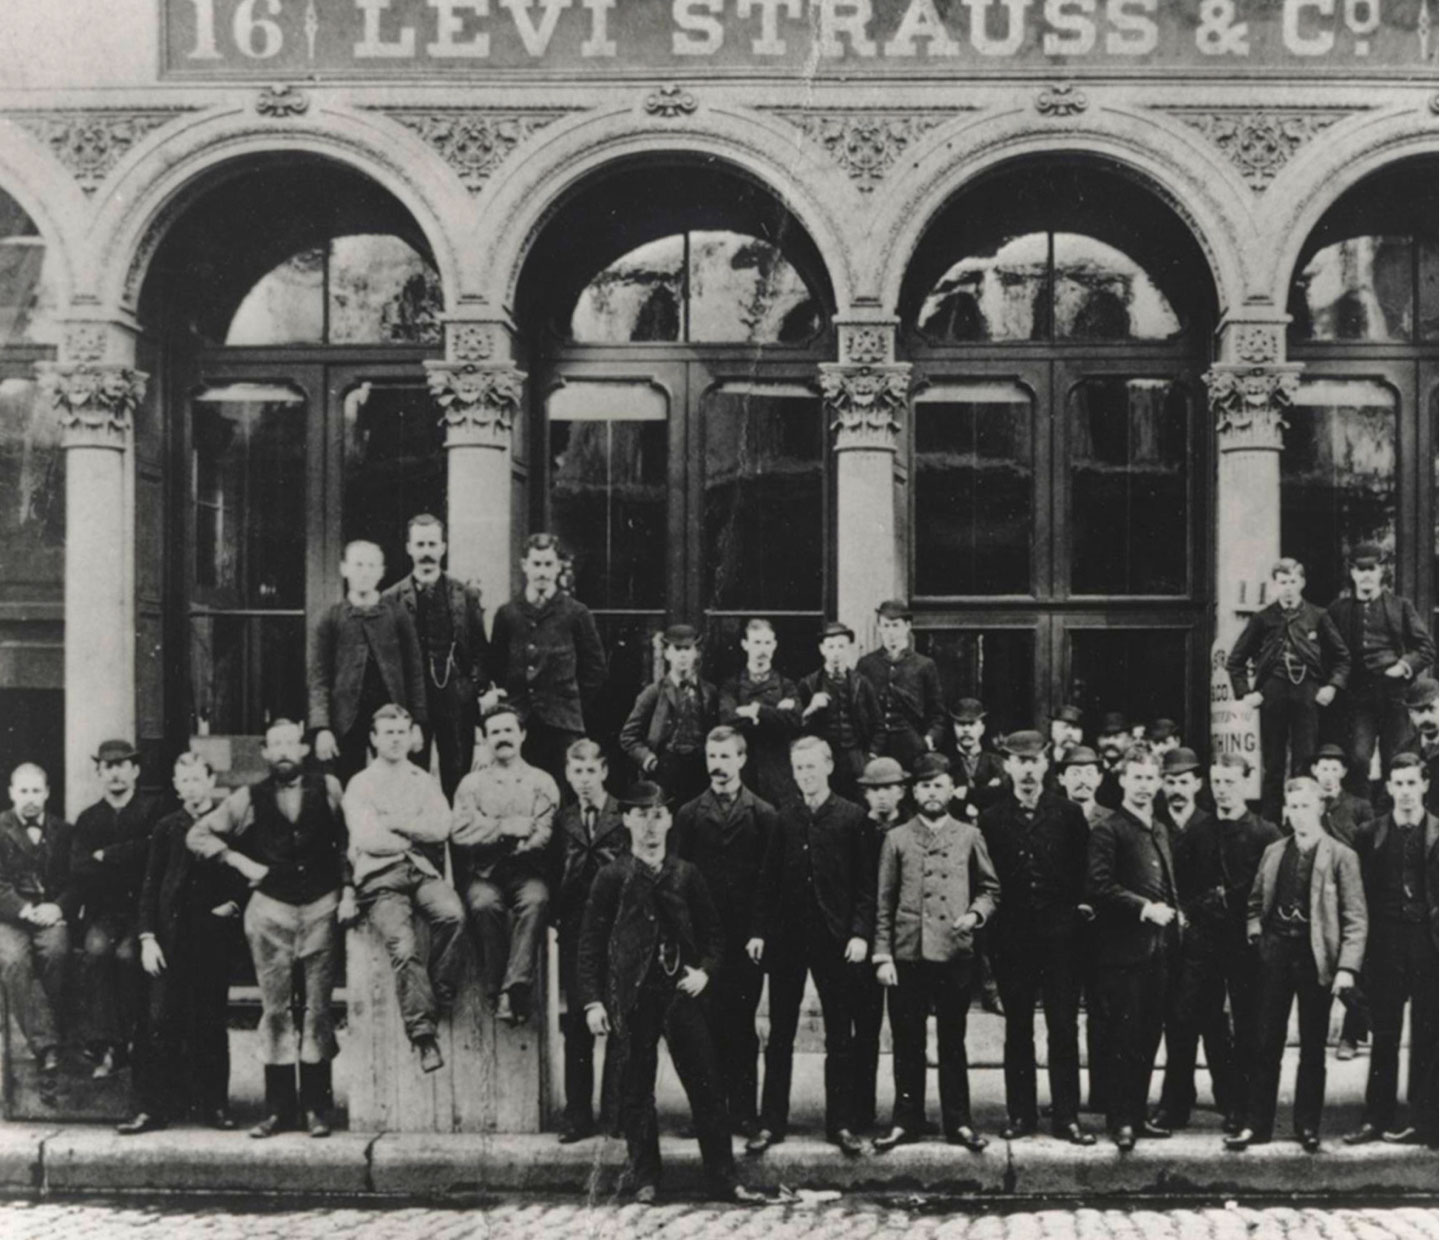 Levis History - Levi Strauss & Co : Levi Strauss & Co